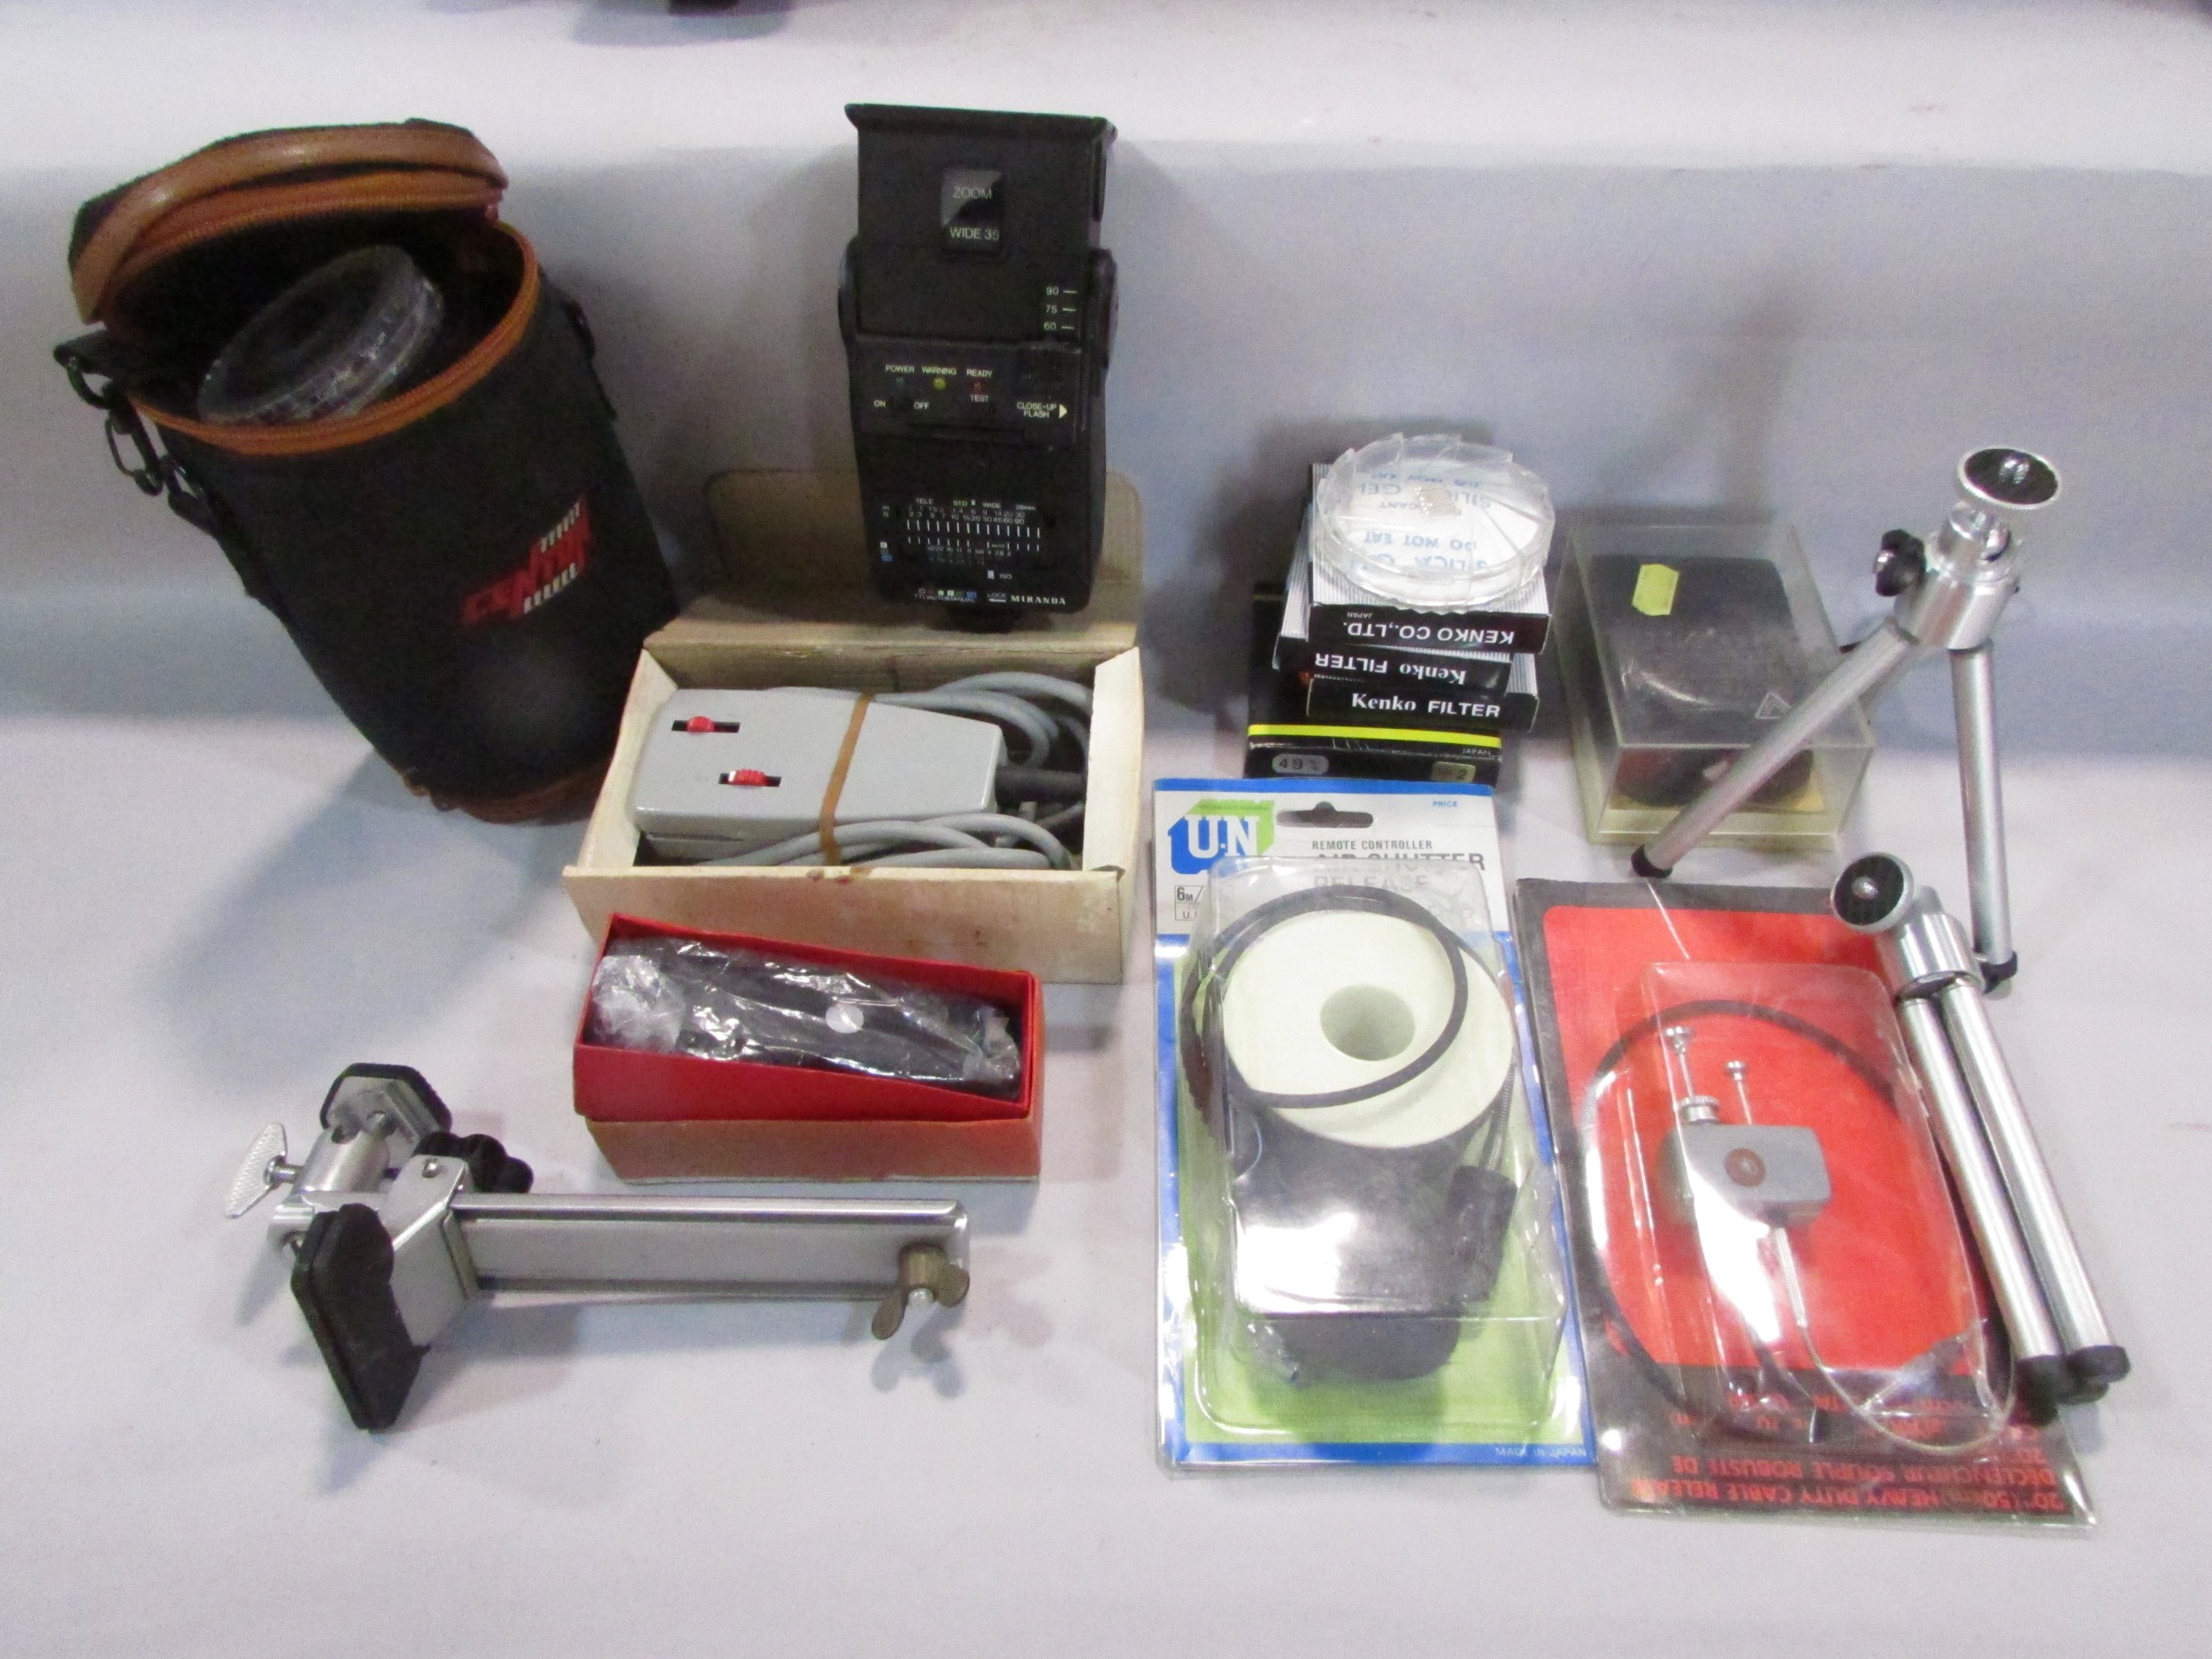 A quantity of photographic equipment including a Minolta 200 MXI camera, a Minolta flash and lens,